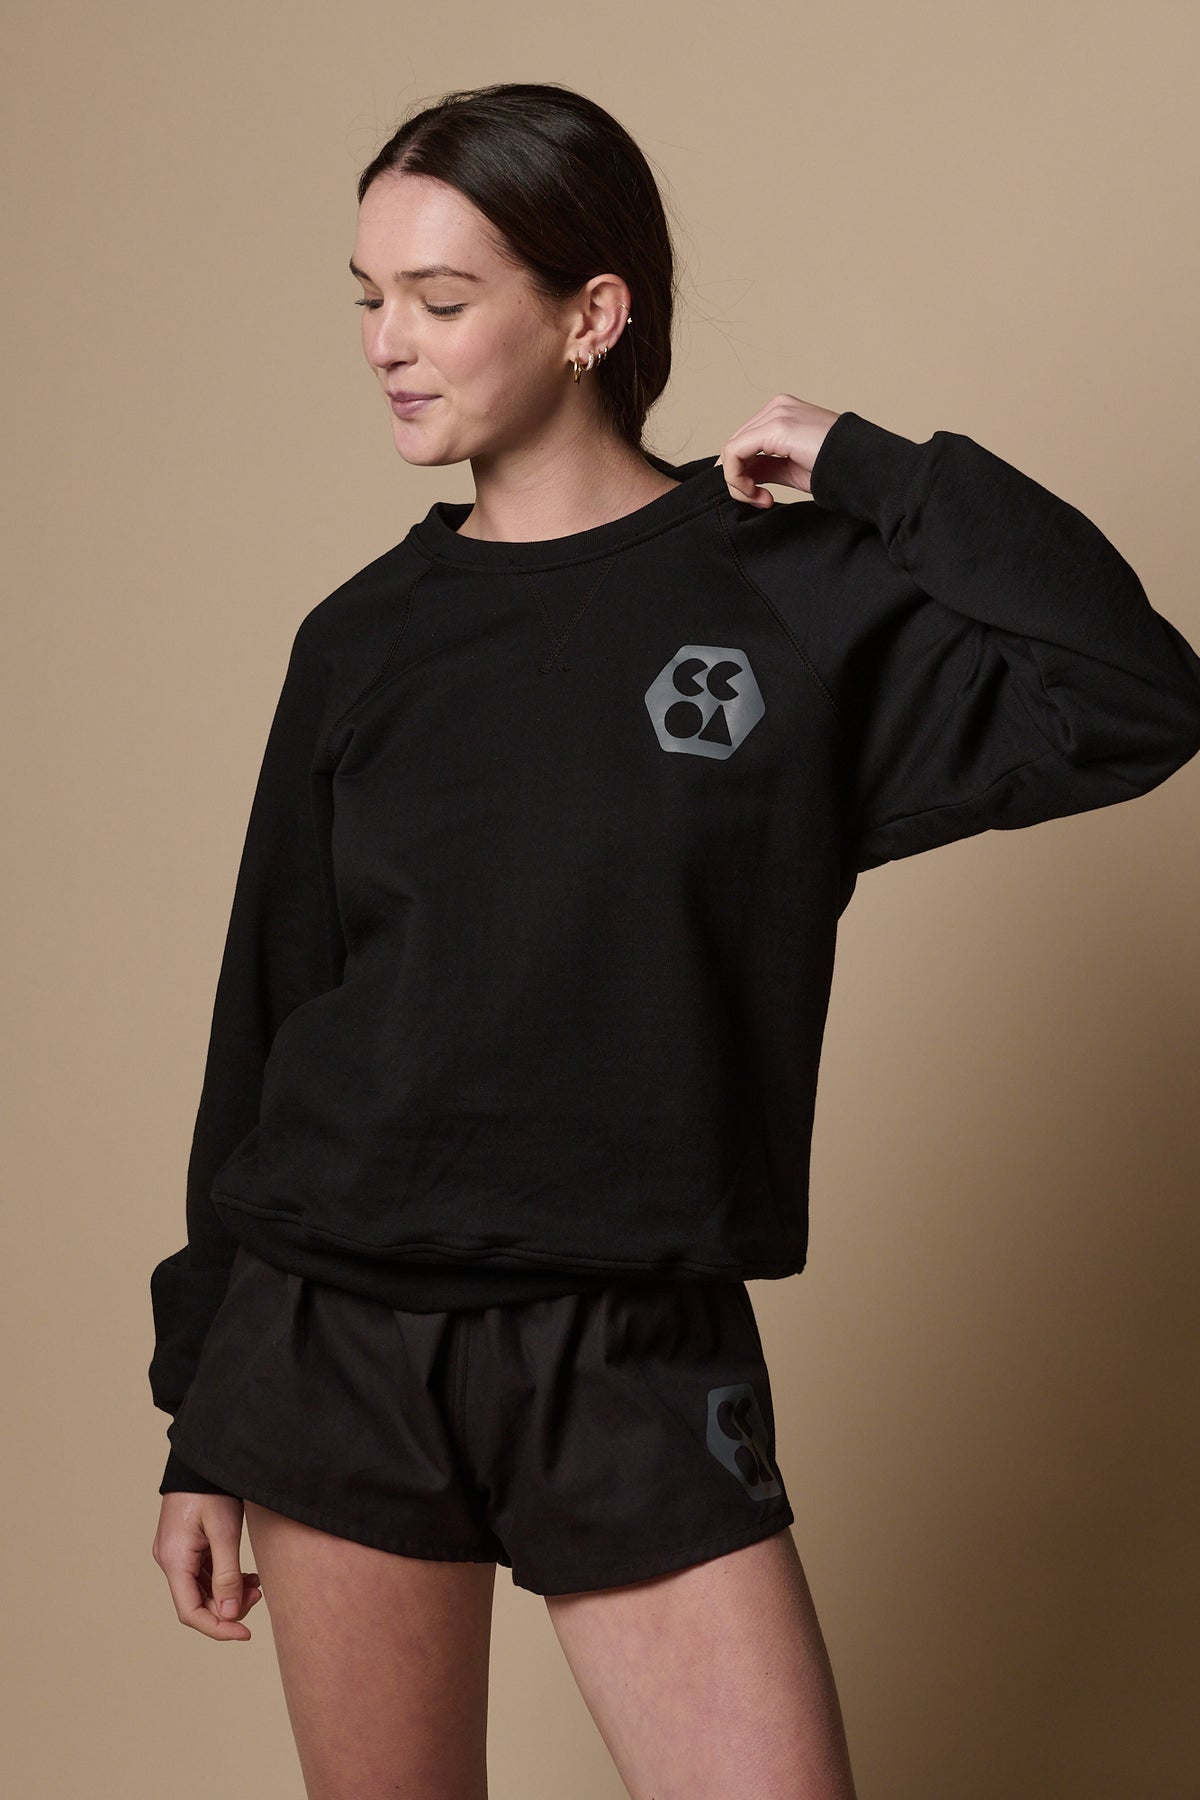 
            Female wearing raglan sweatshirt in black with CCOA logo